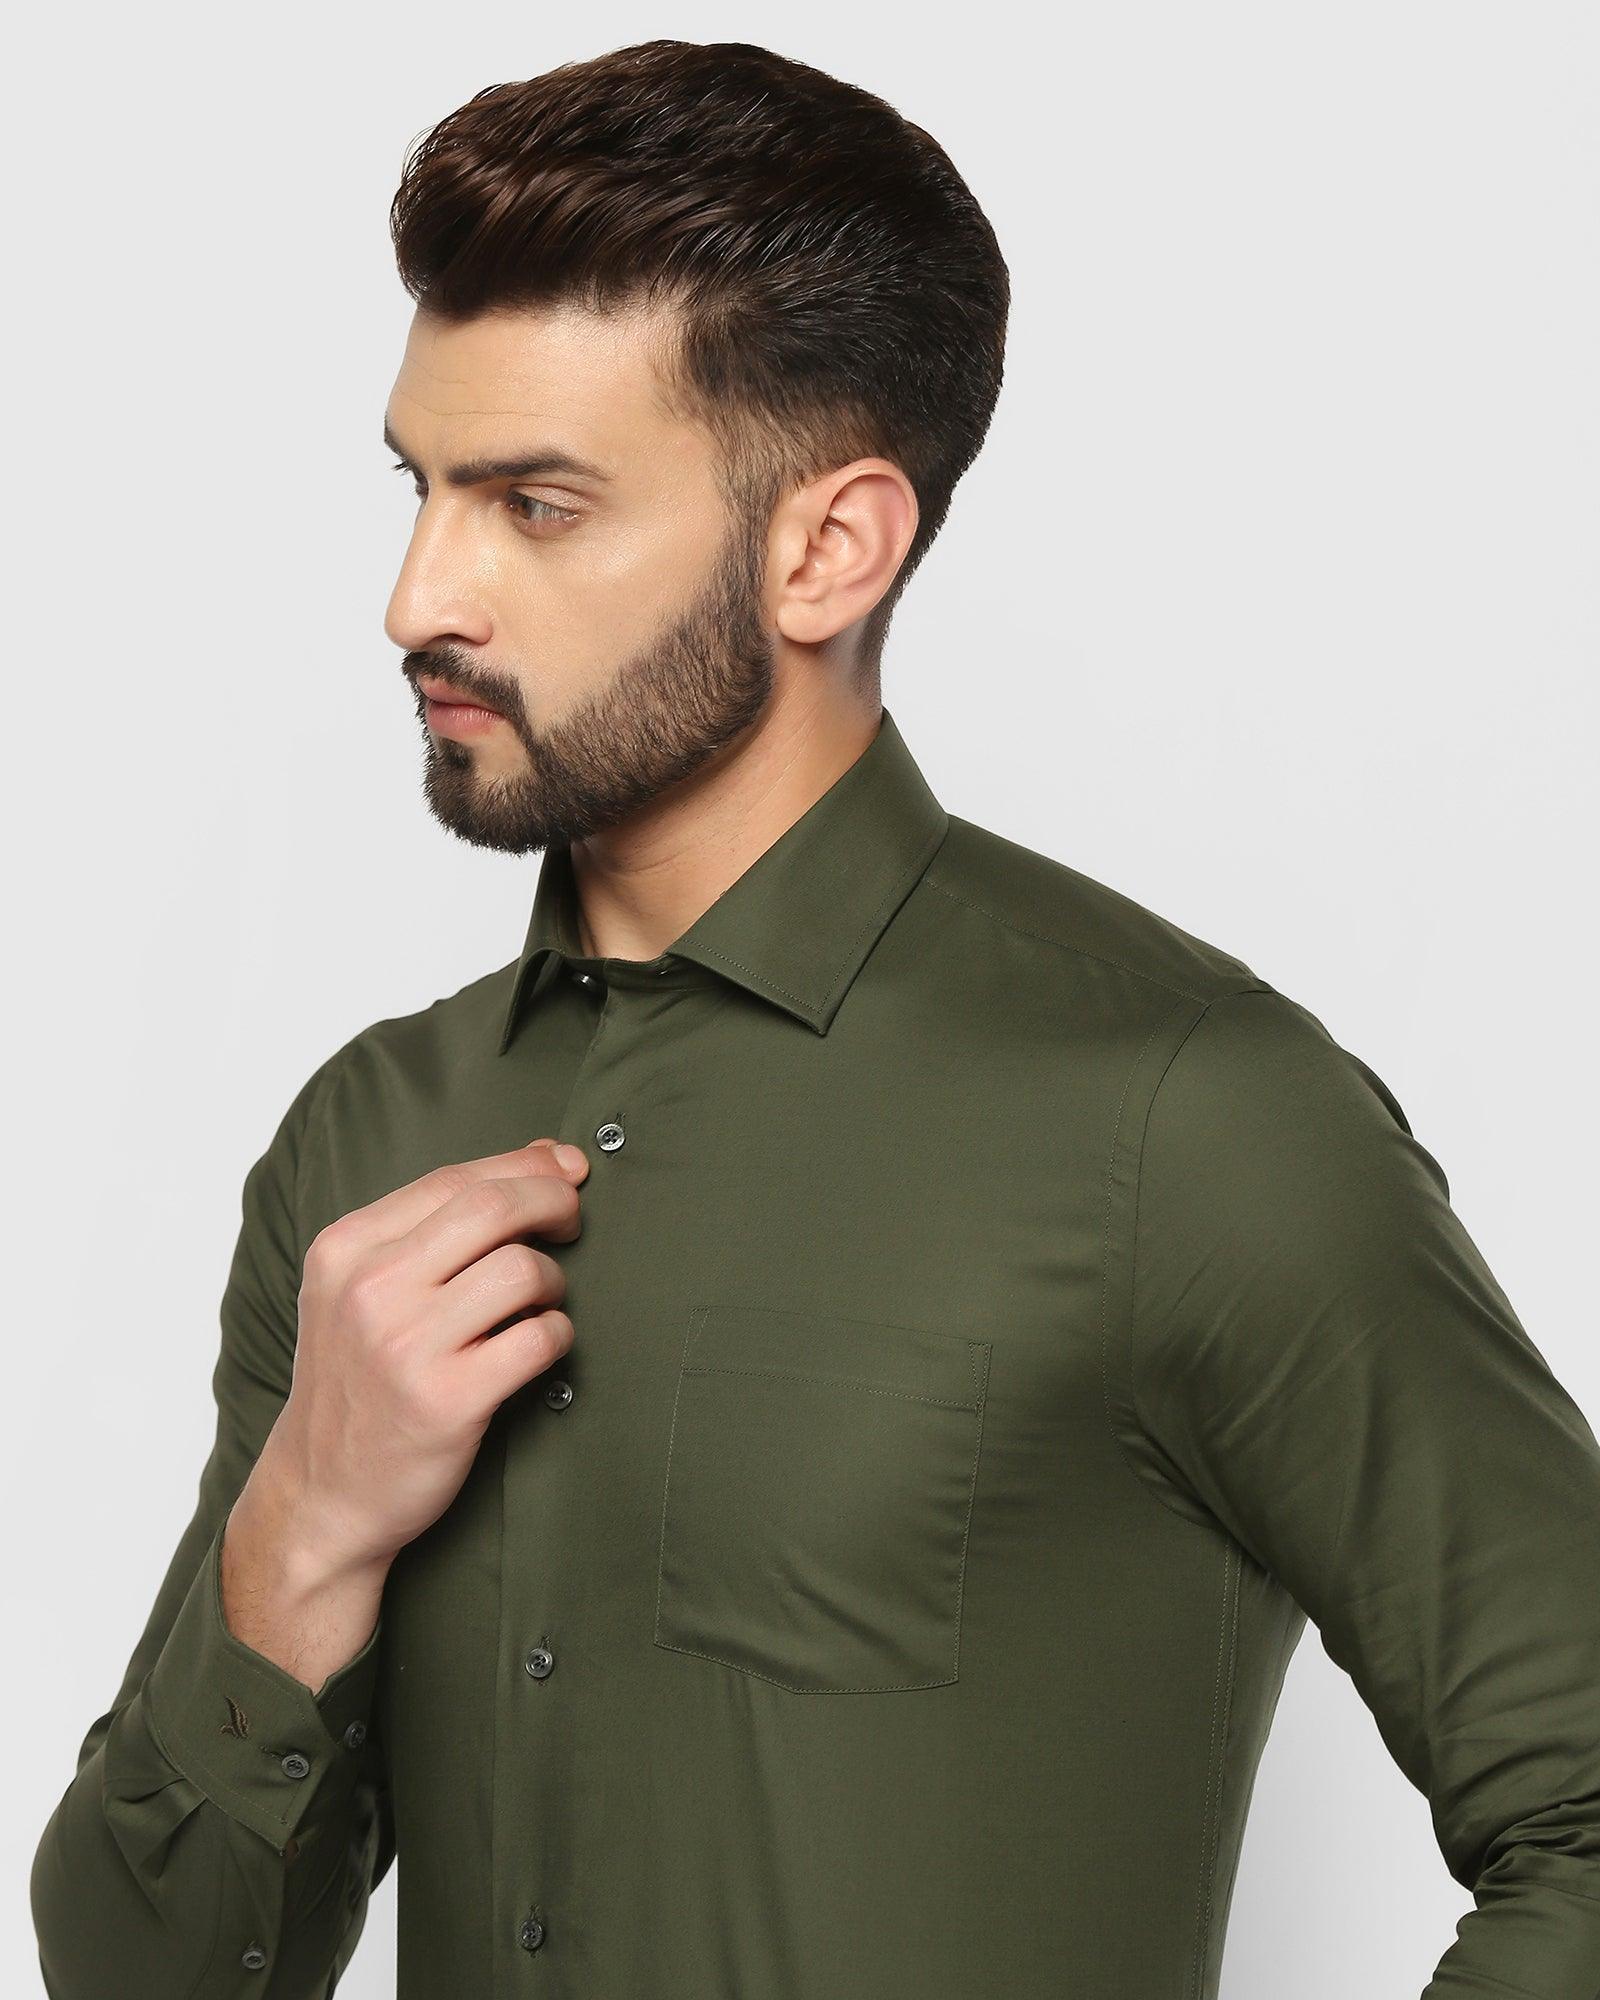 Formal Olive Solid Shirt - Retro